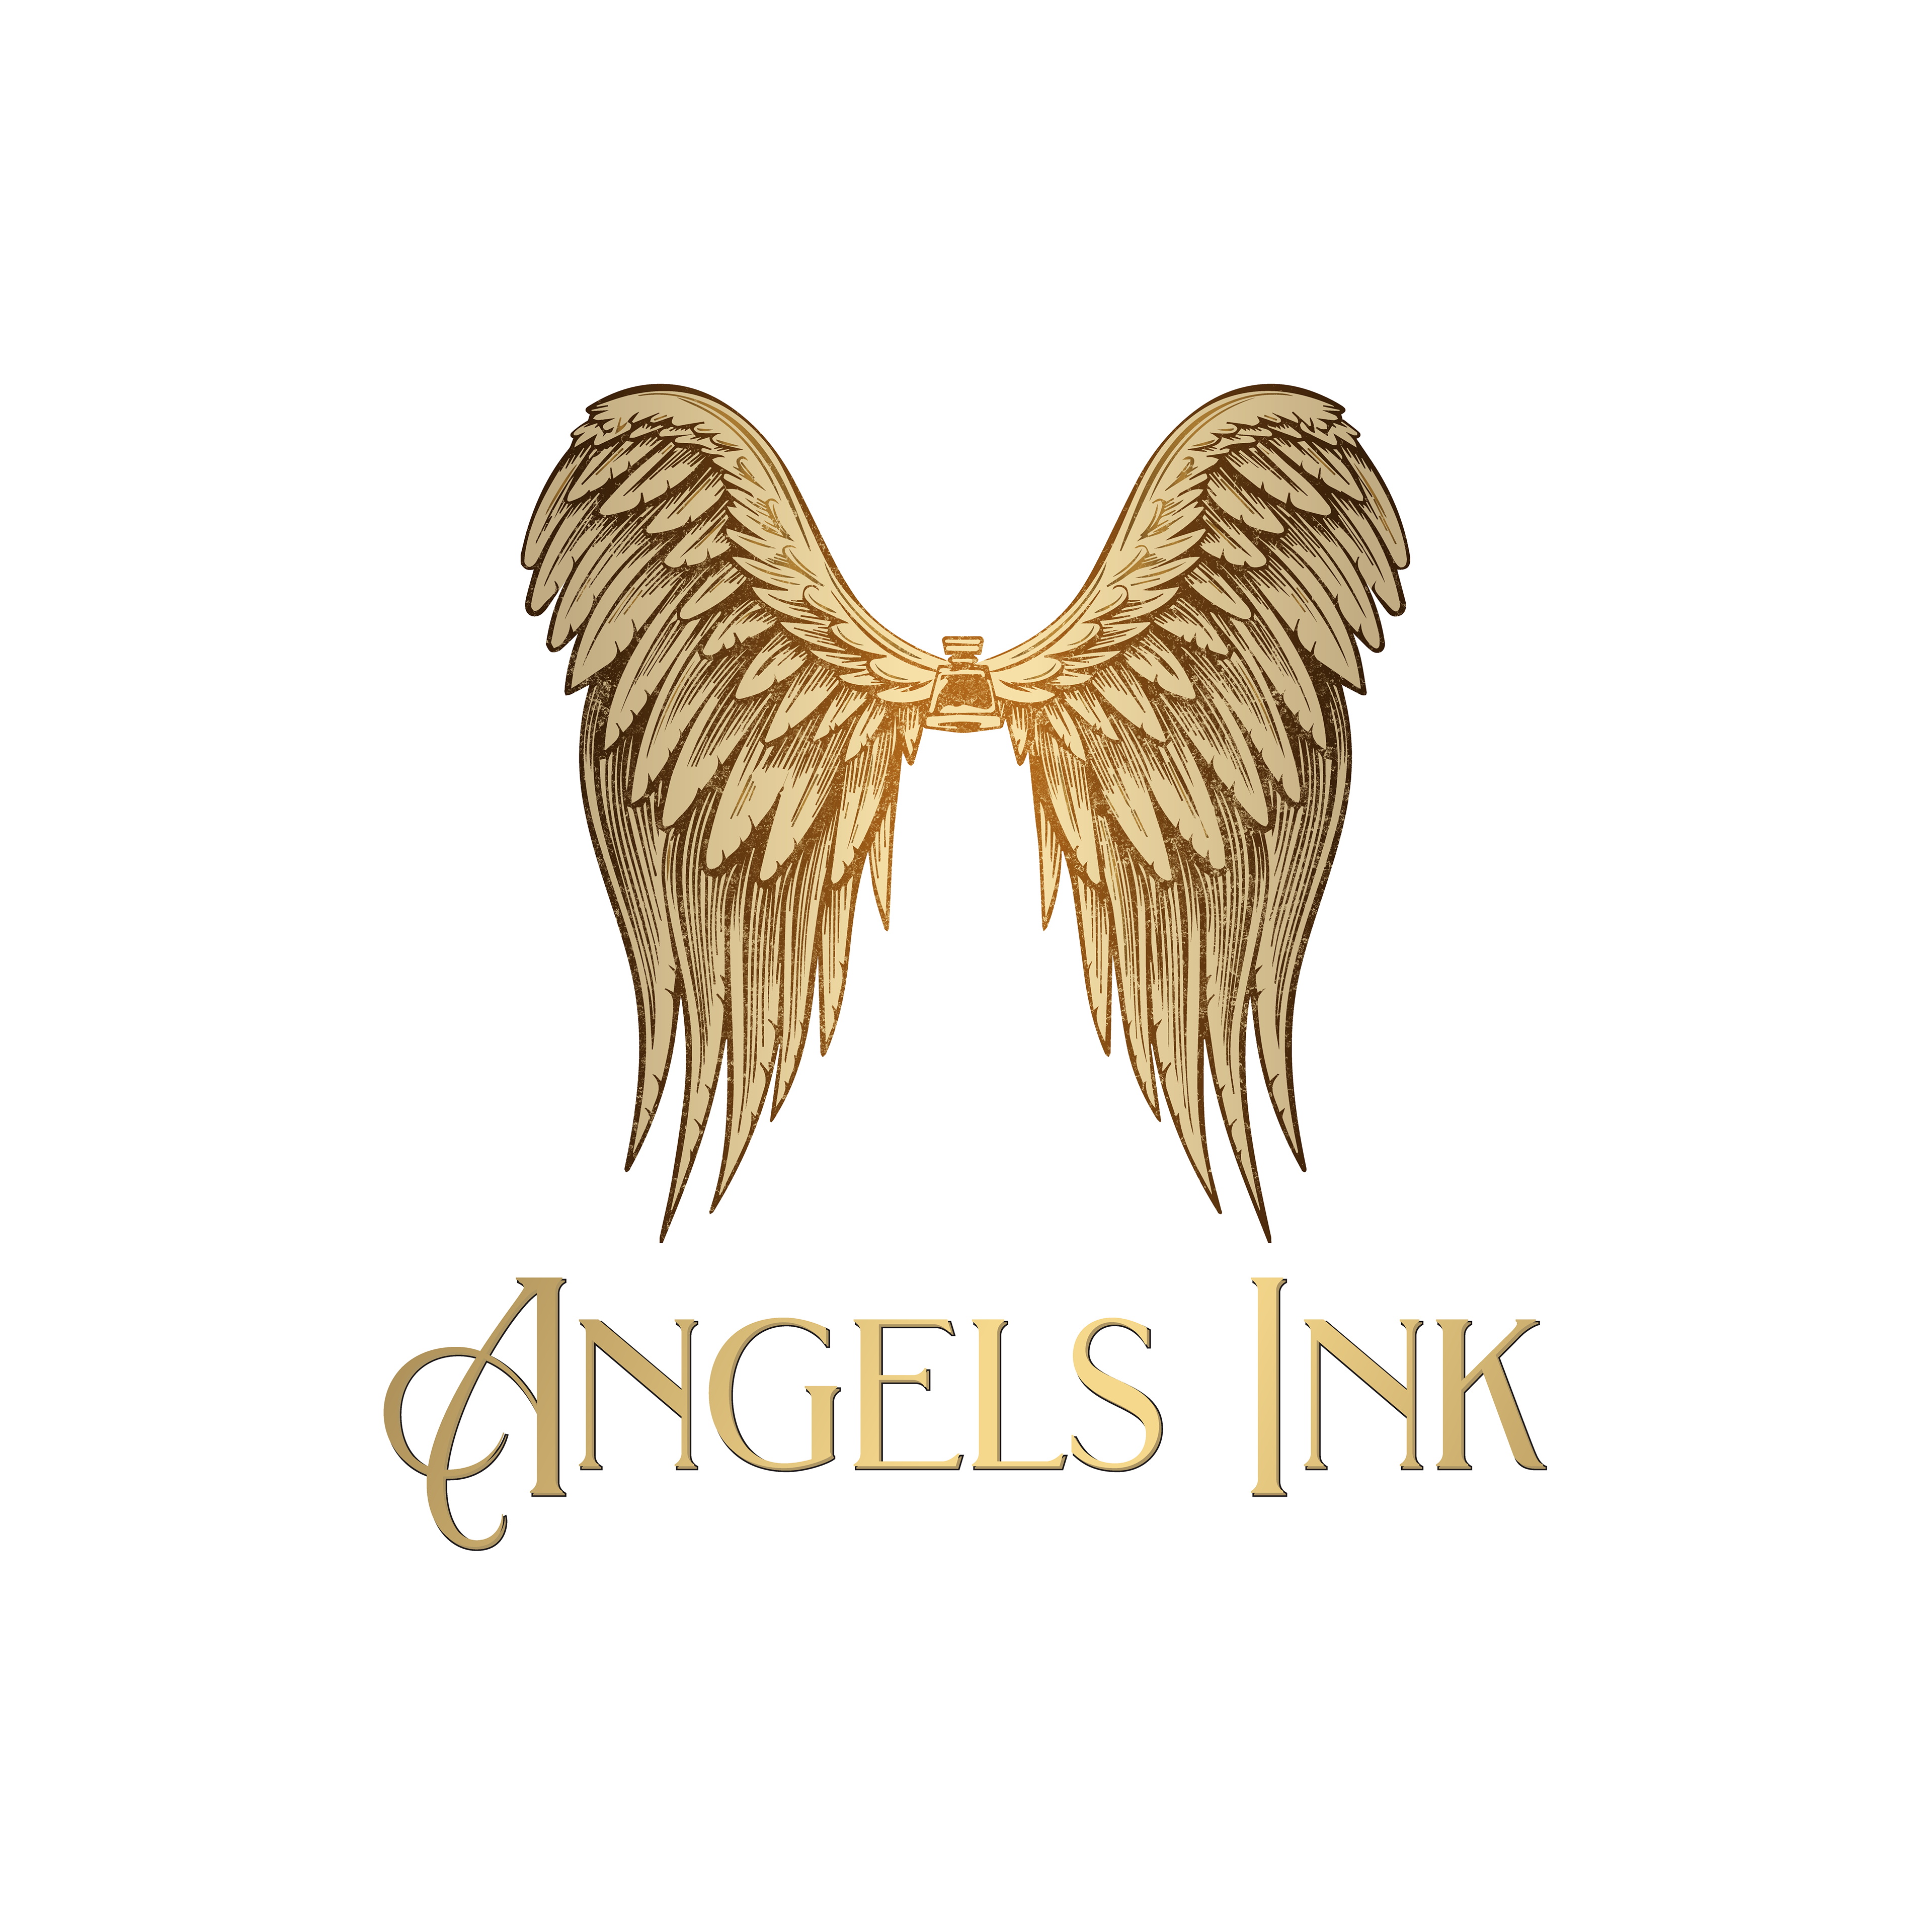 ANGELS INK